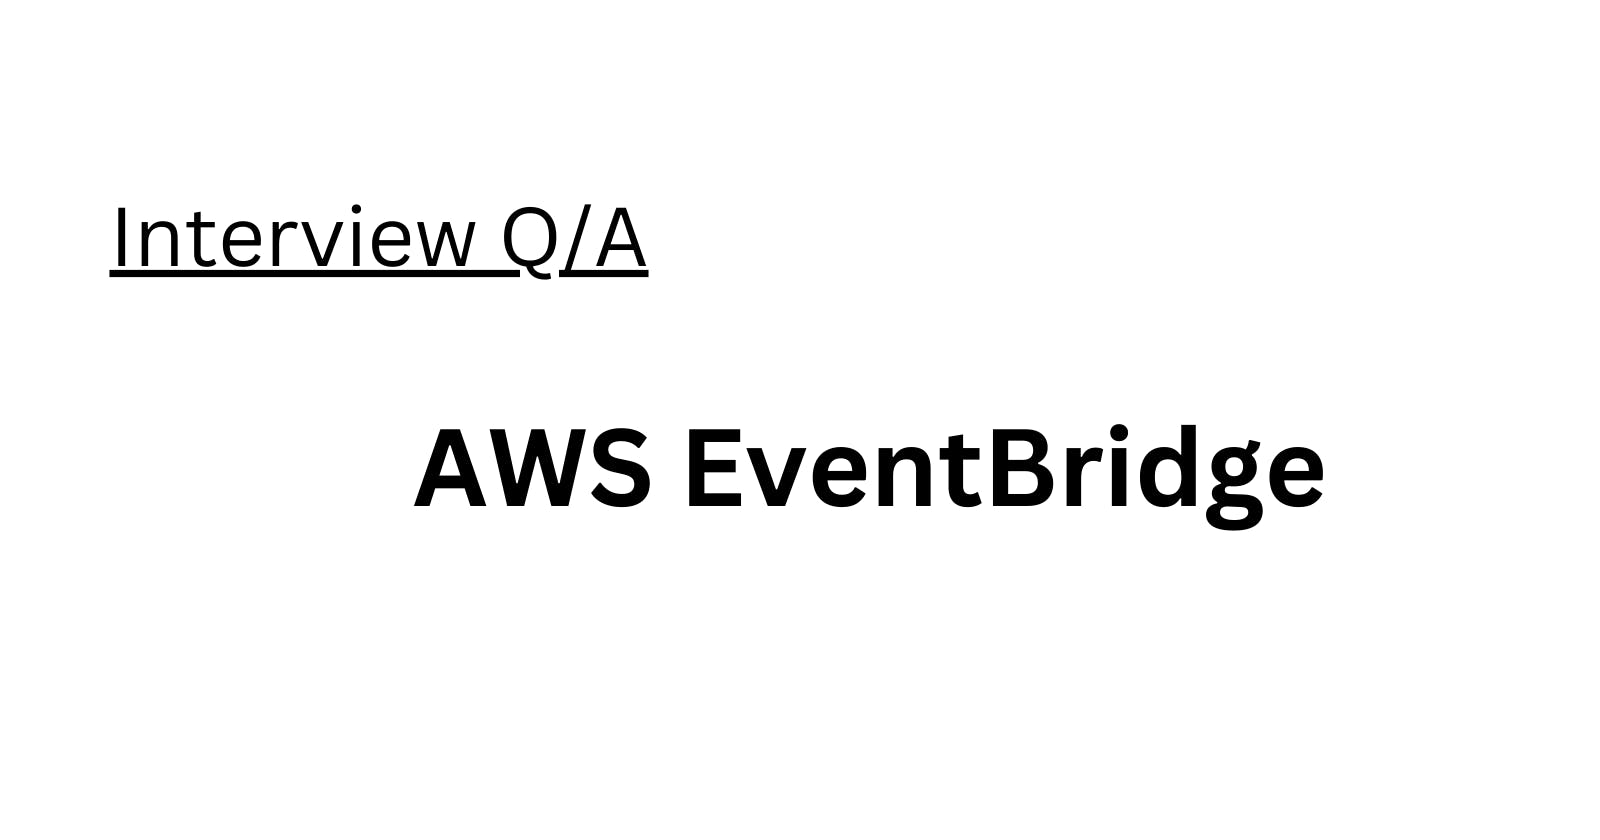 AWS EventBridge Interview Q/A